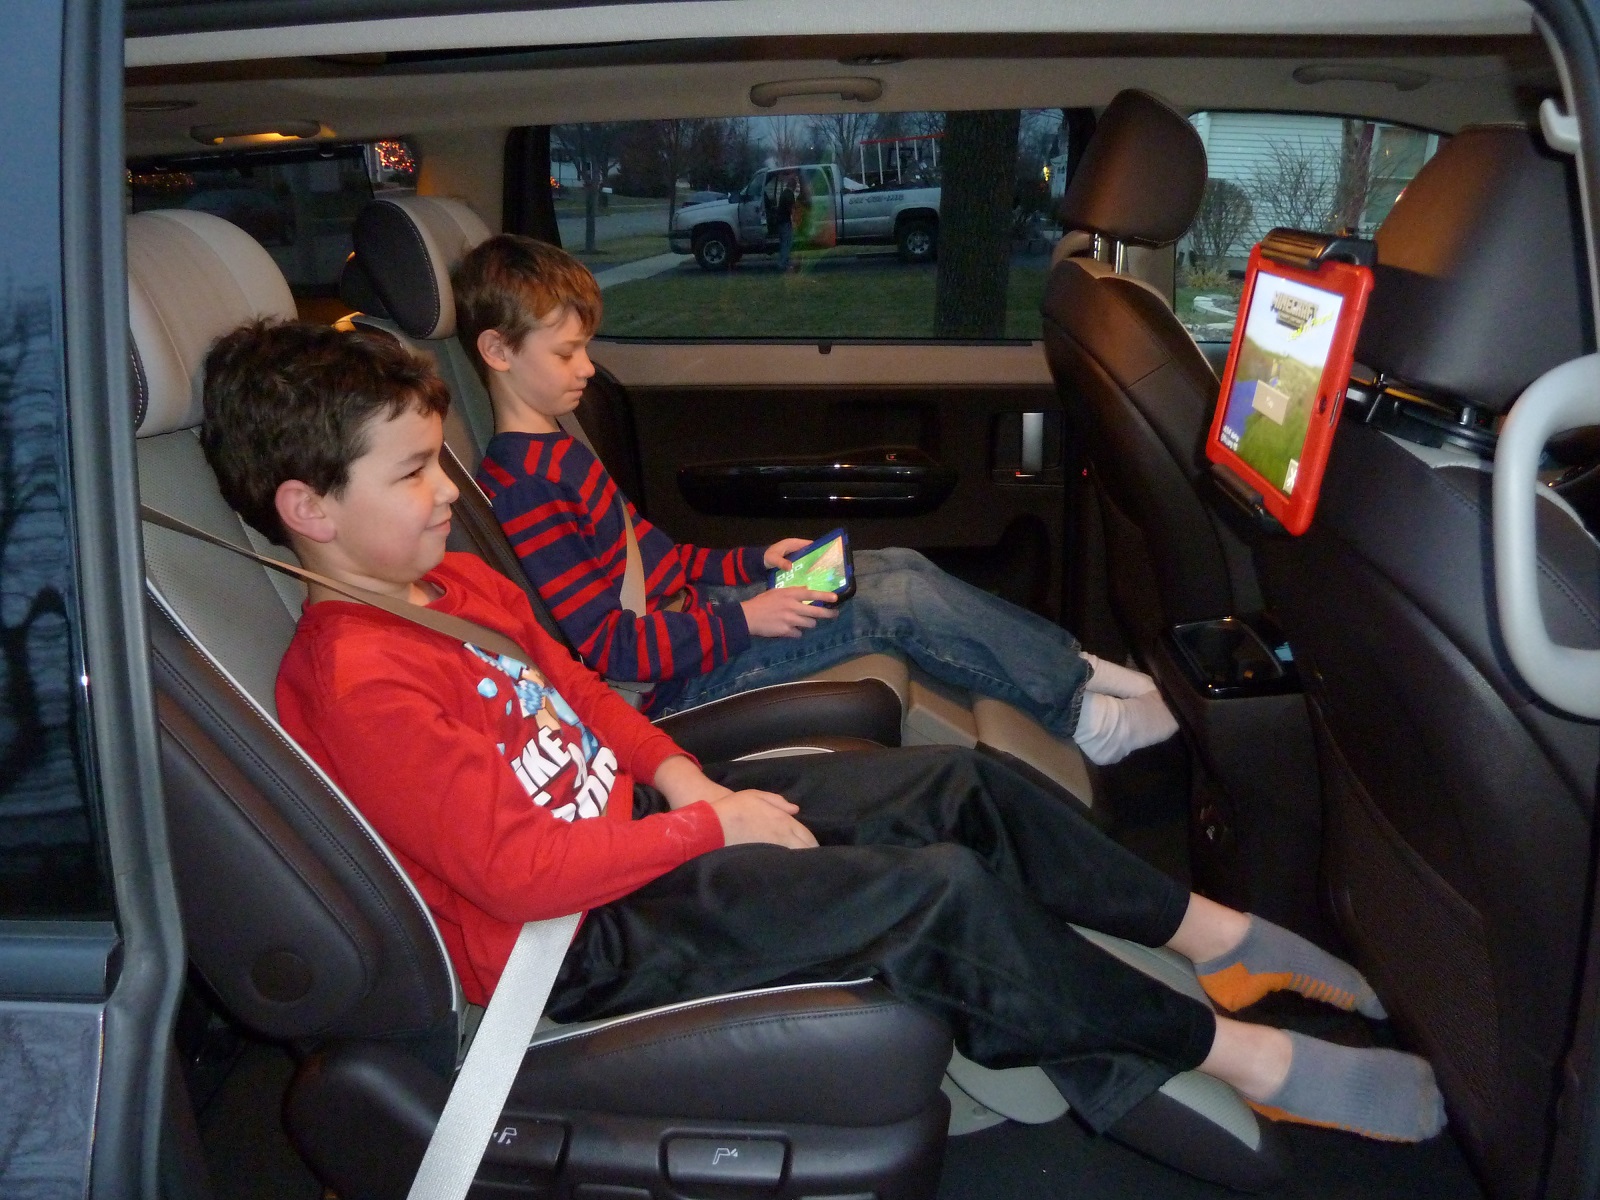 Dangerous Seat Belt Extenders – CarseatBlog